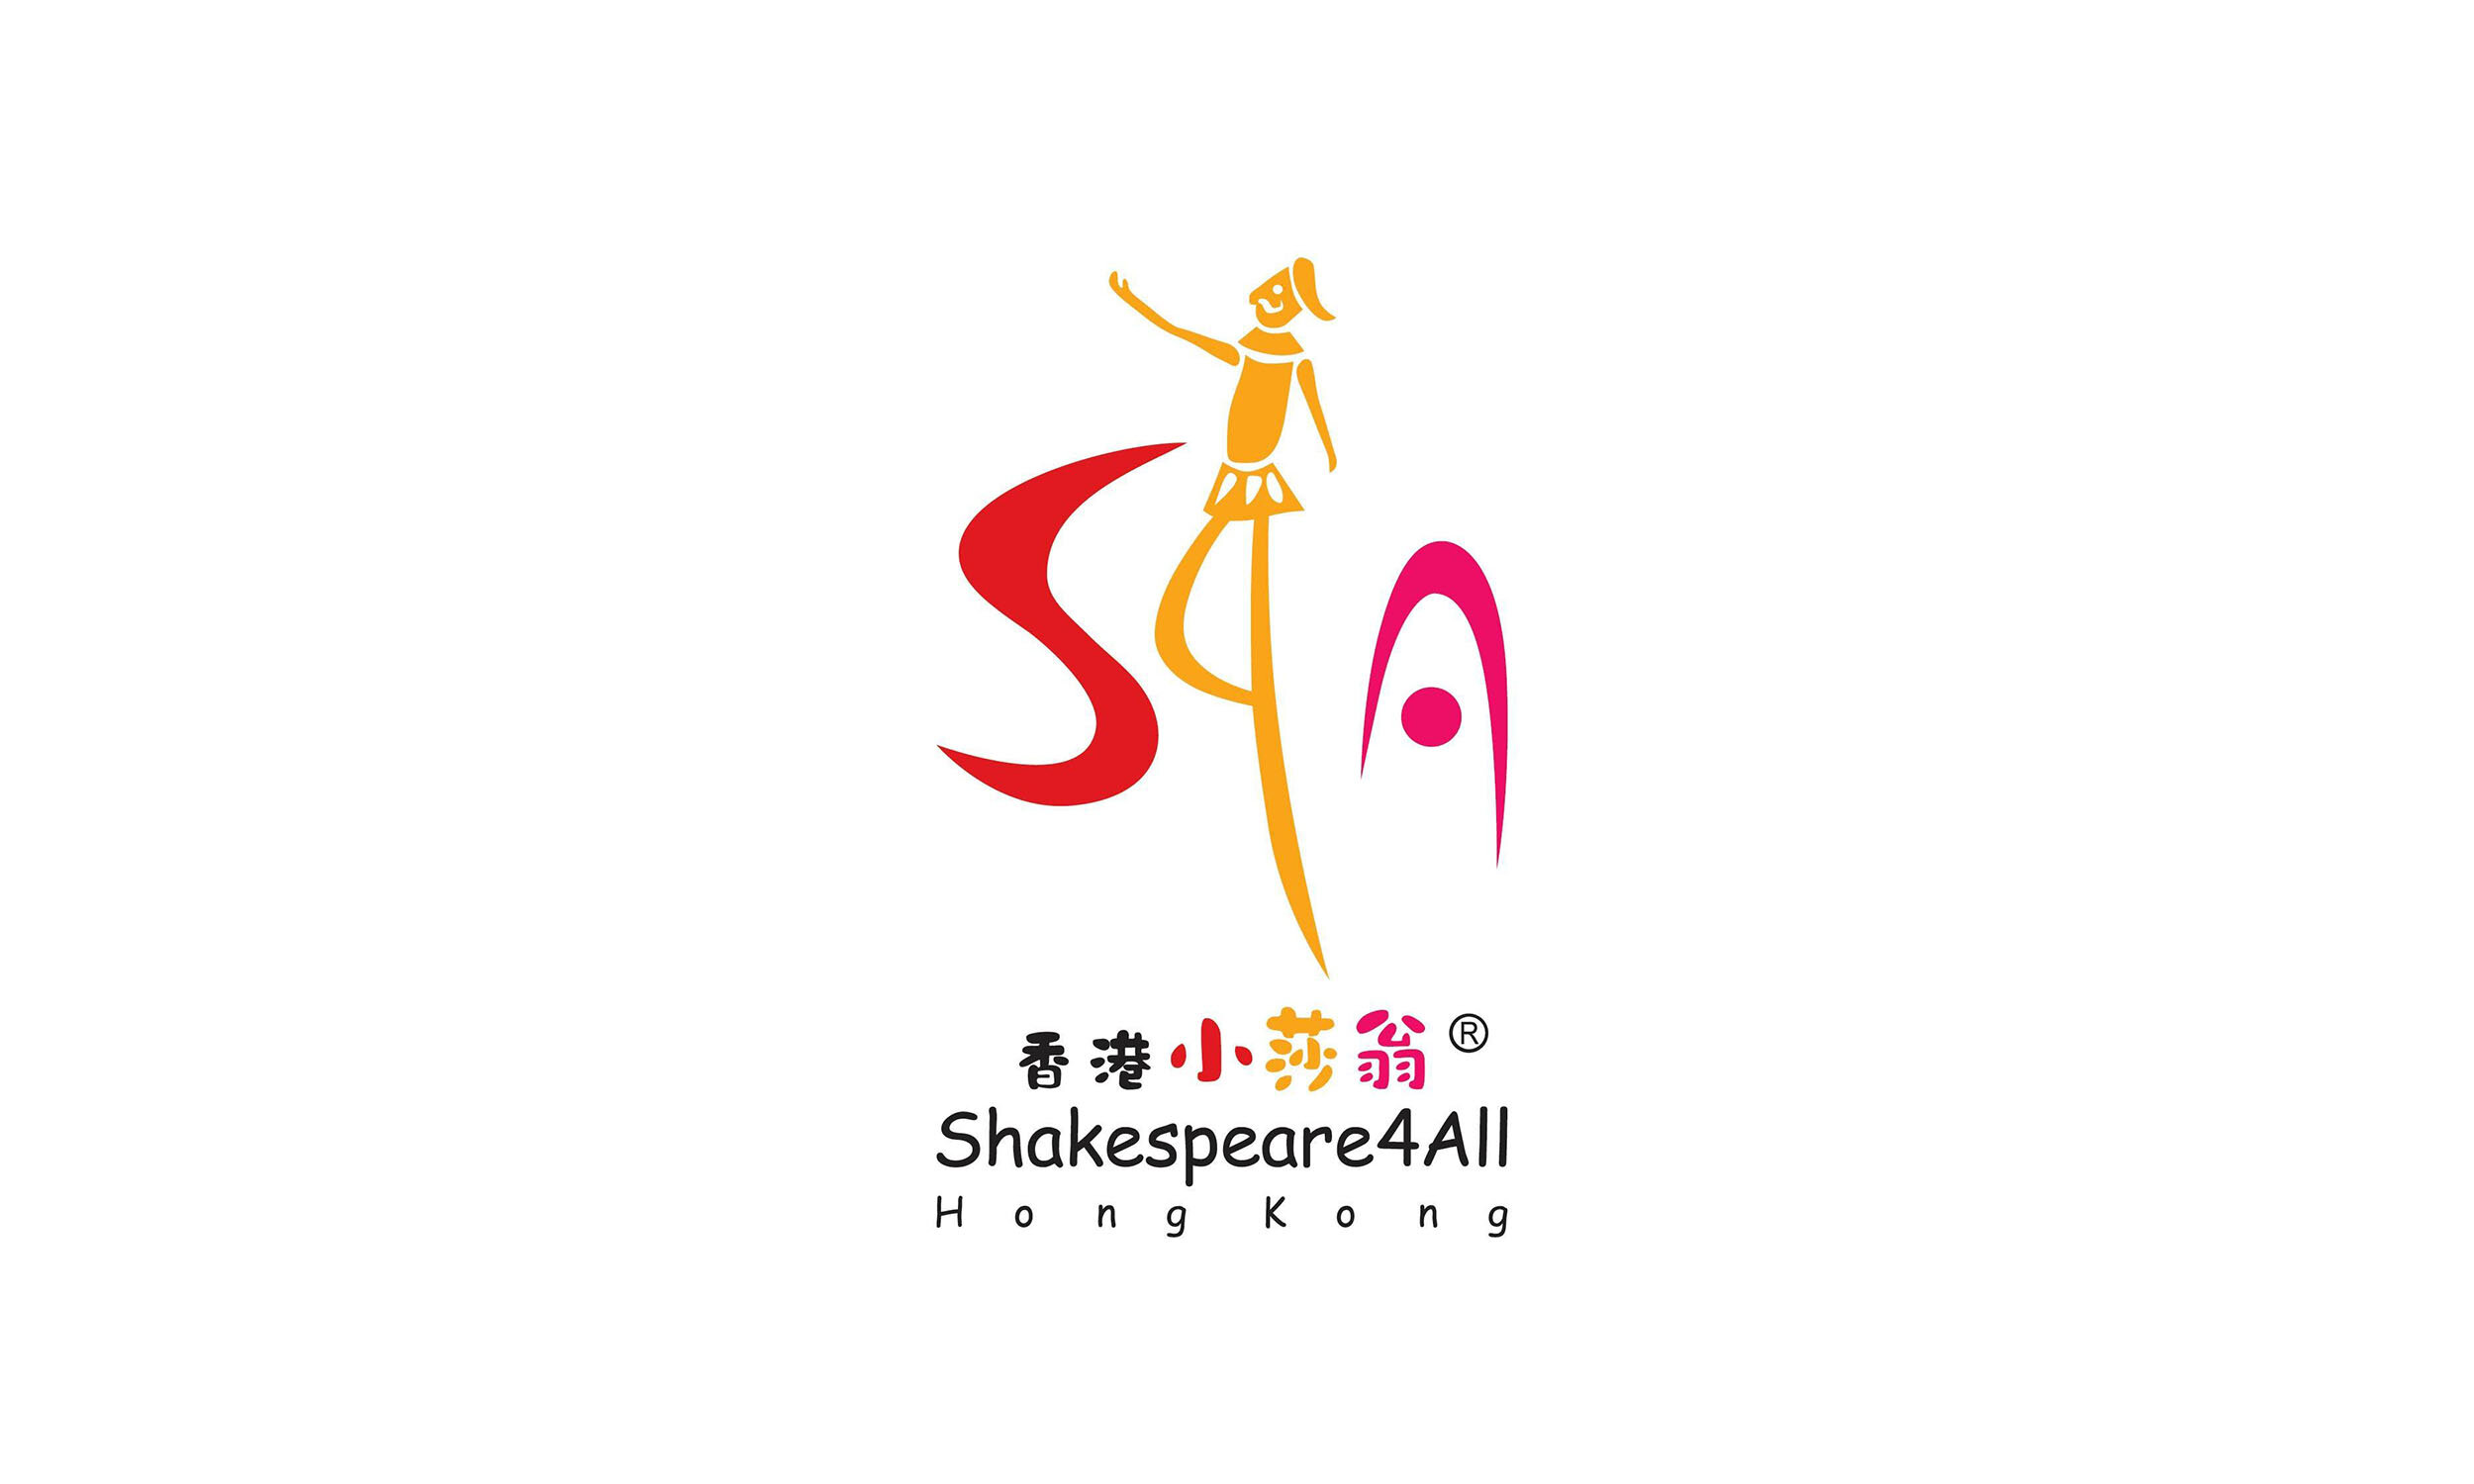 Shakespeare4All Hong Kong